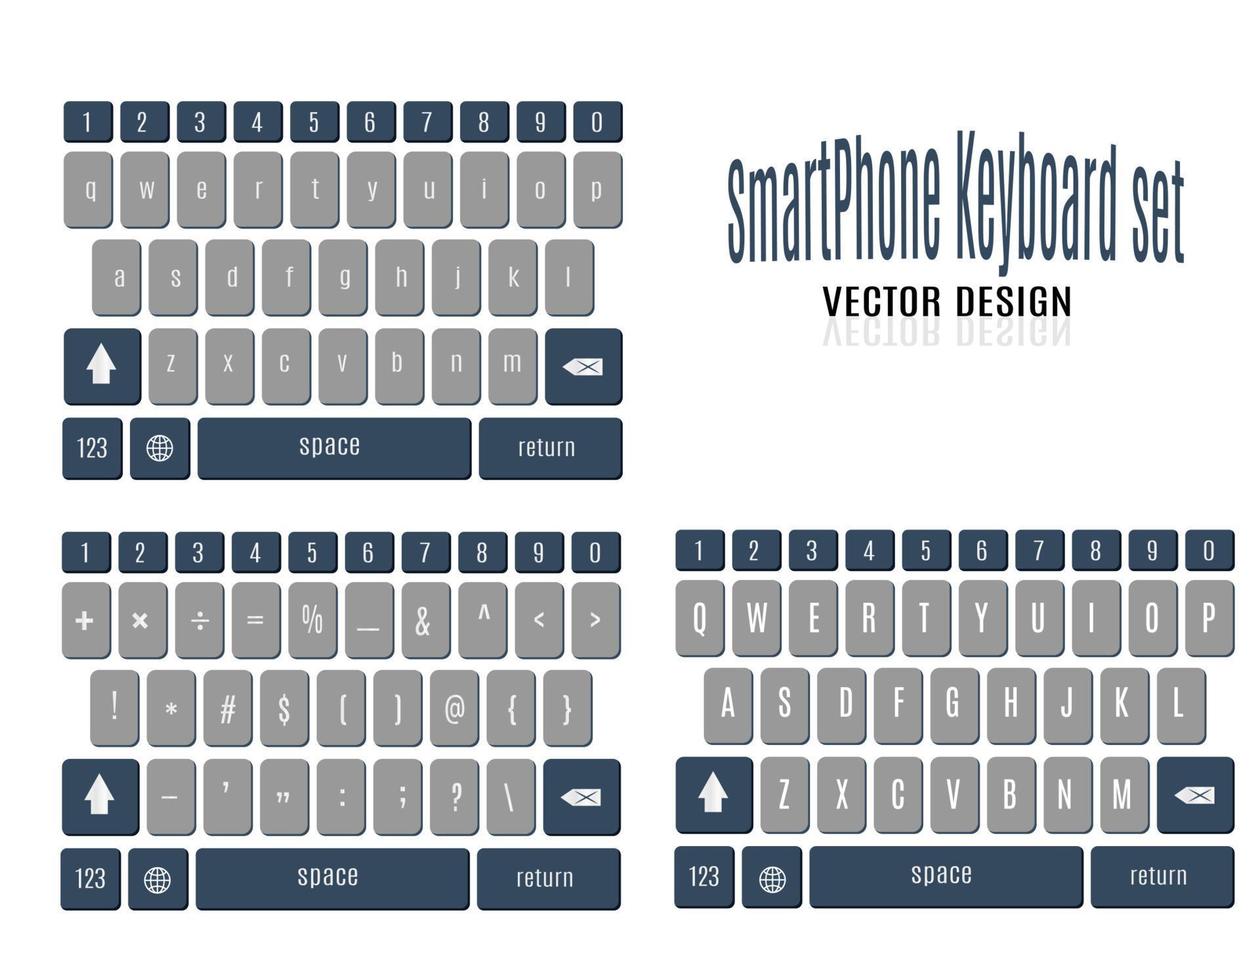 Smartphone keyboard template vector